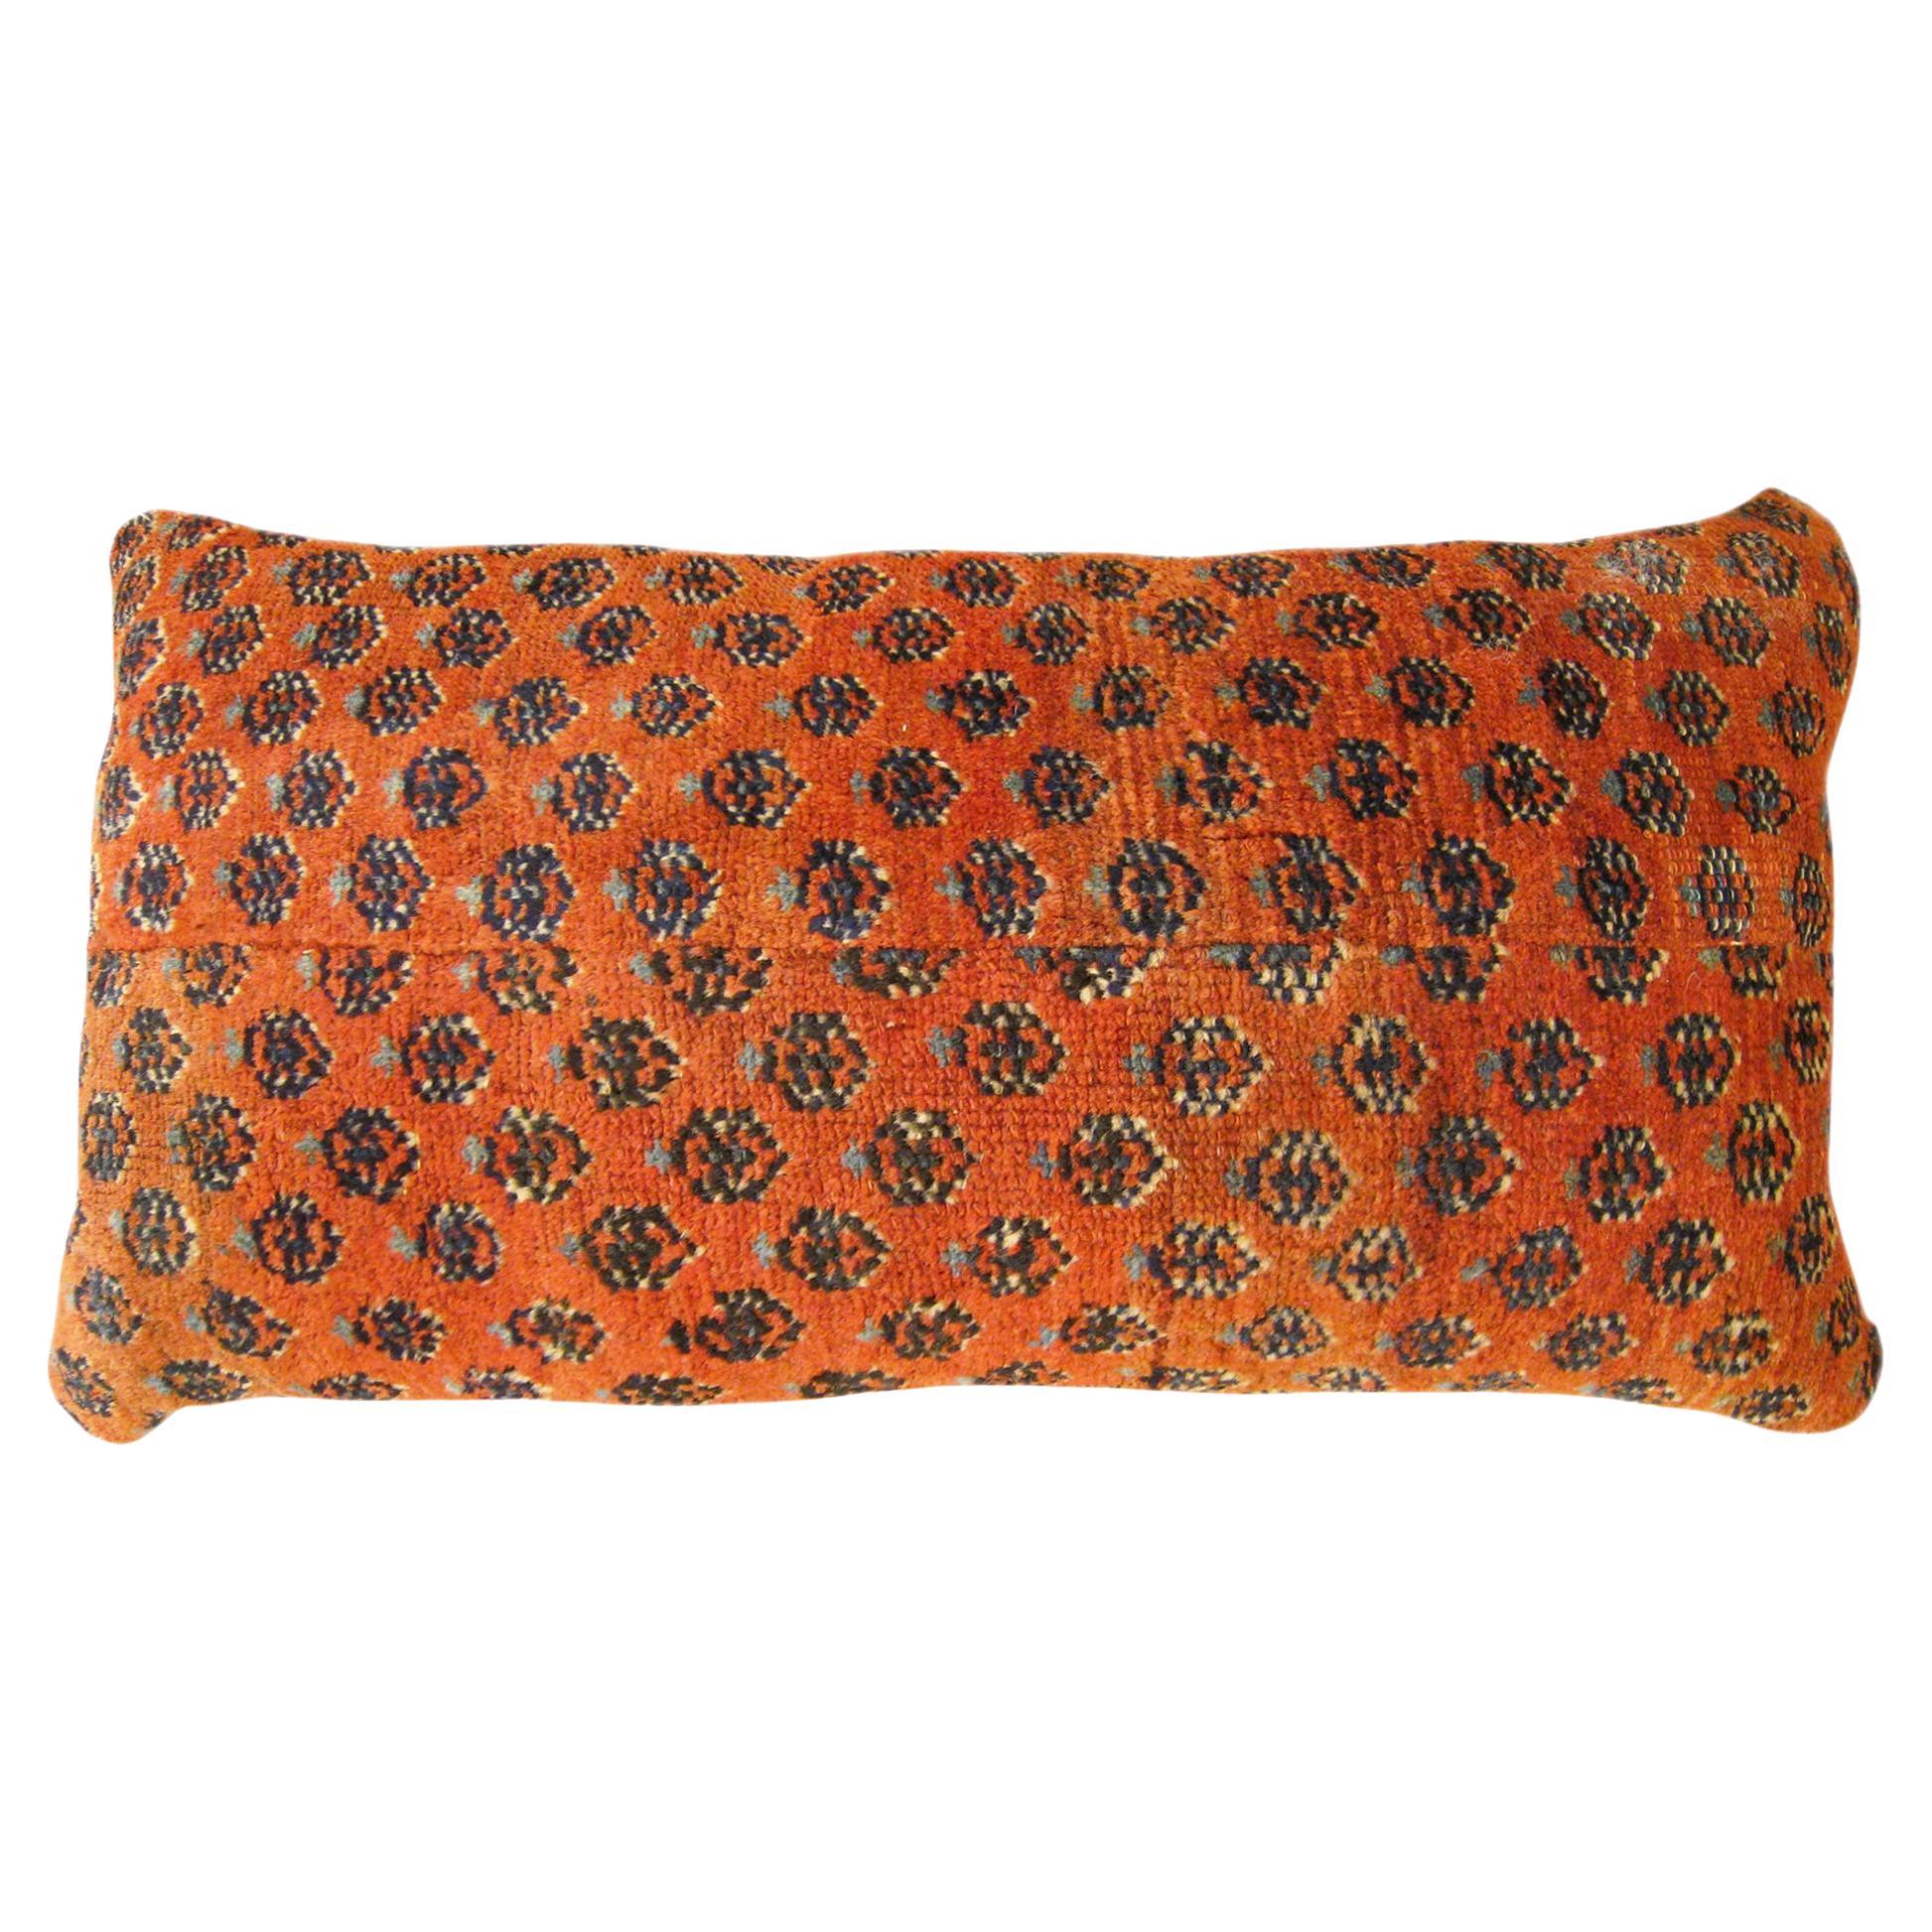 Decorative Antique Persian Saraband Carpet Pillow with Floral Elements